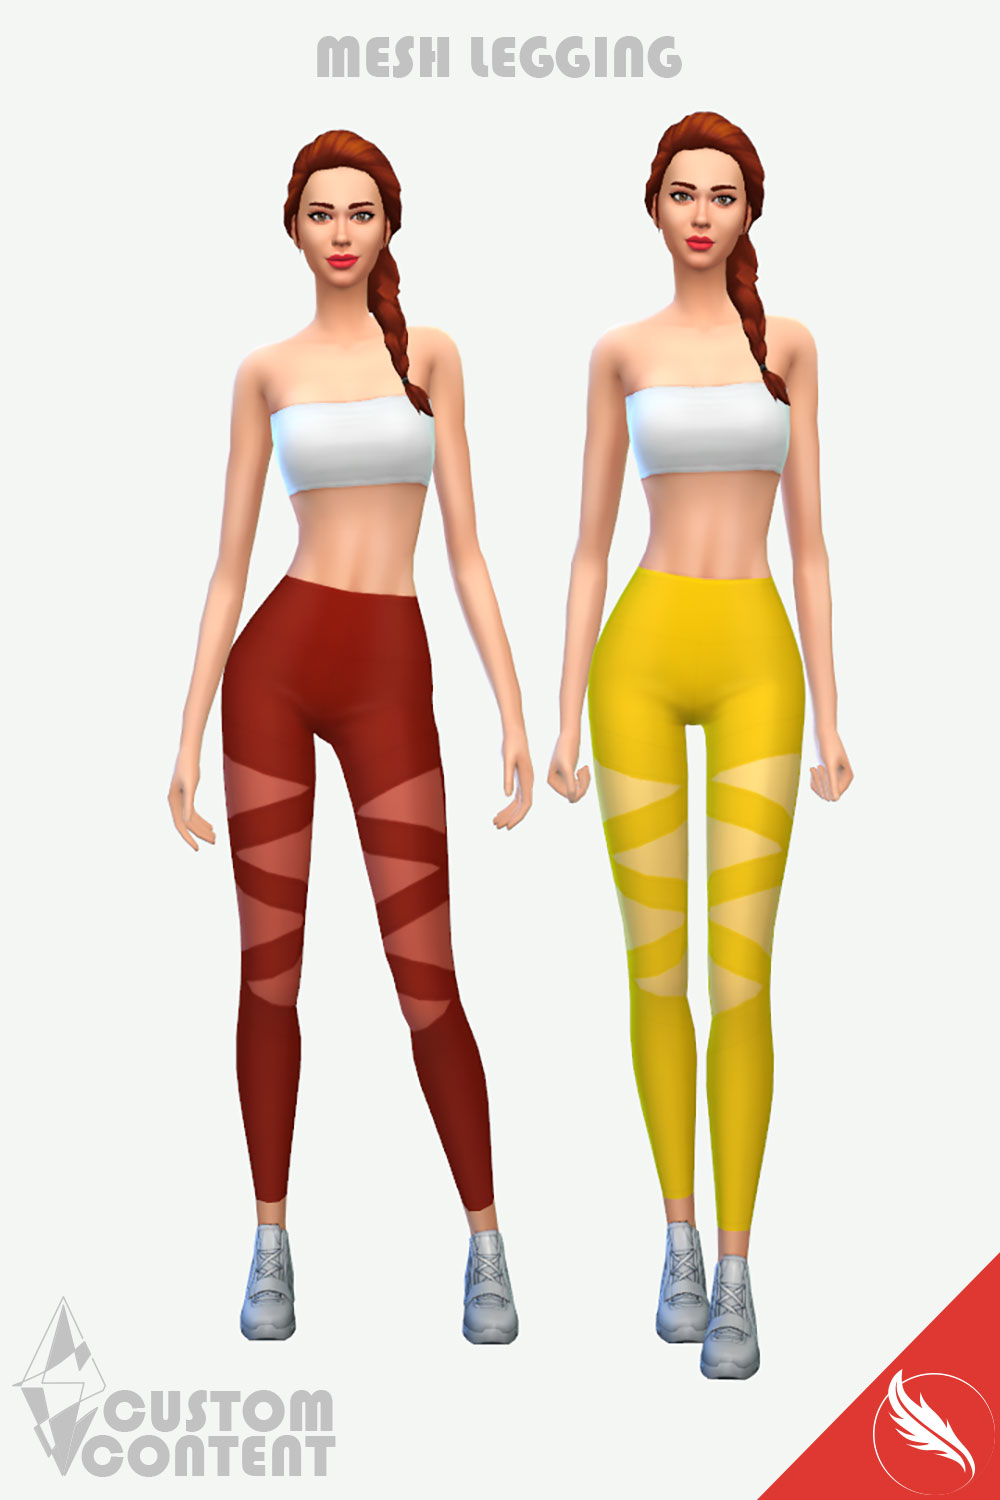 The sims 4 cc sportswear mesh legging